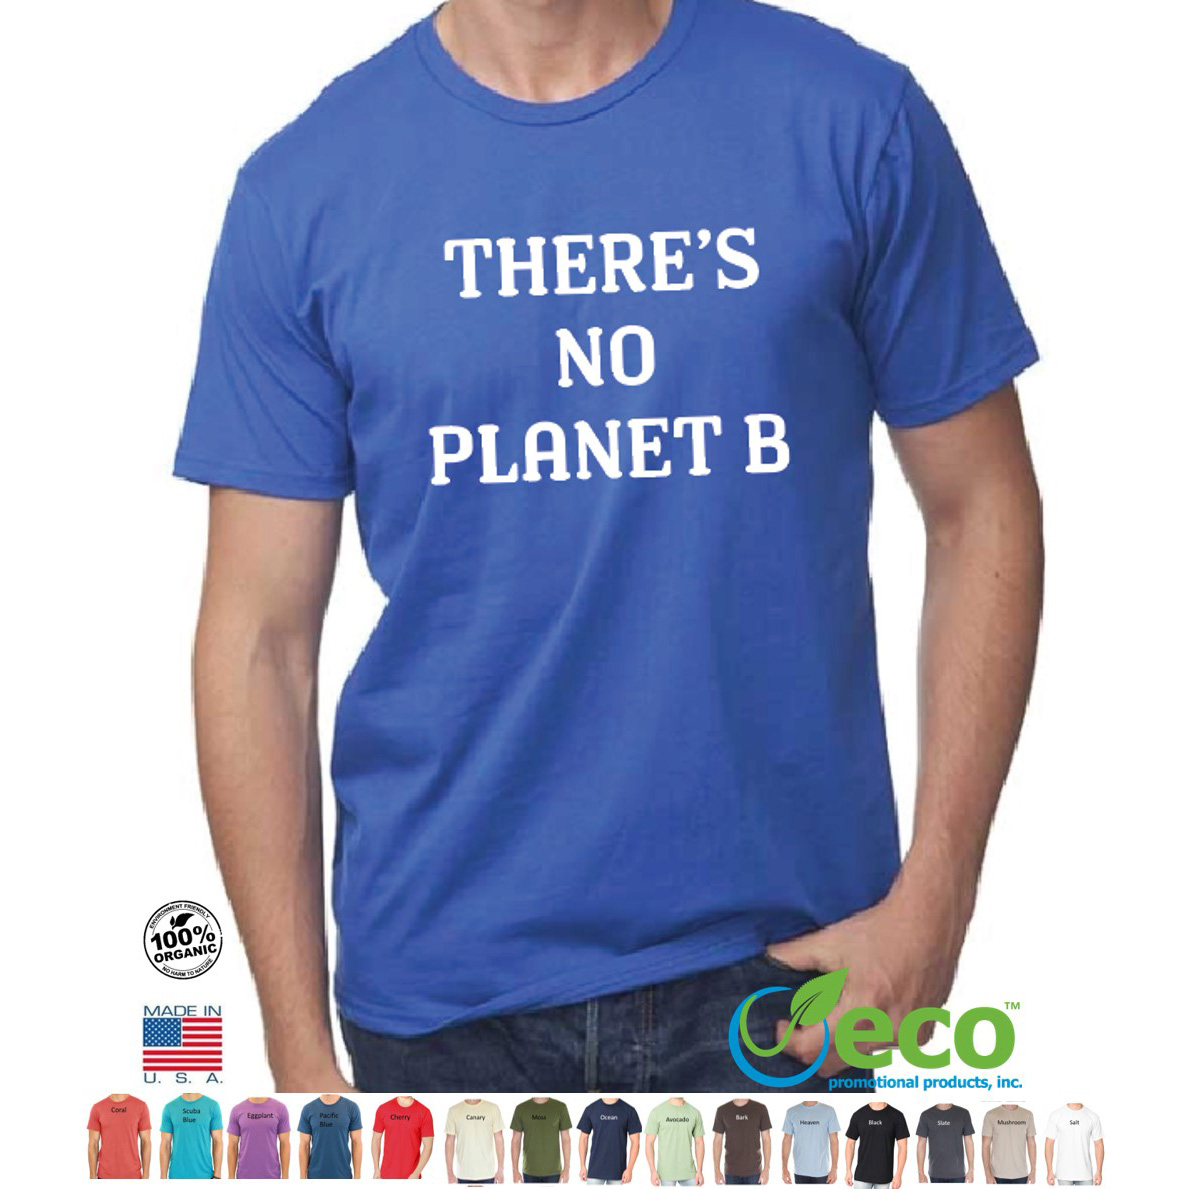 popular sustainable organic cotton eco t-shirt